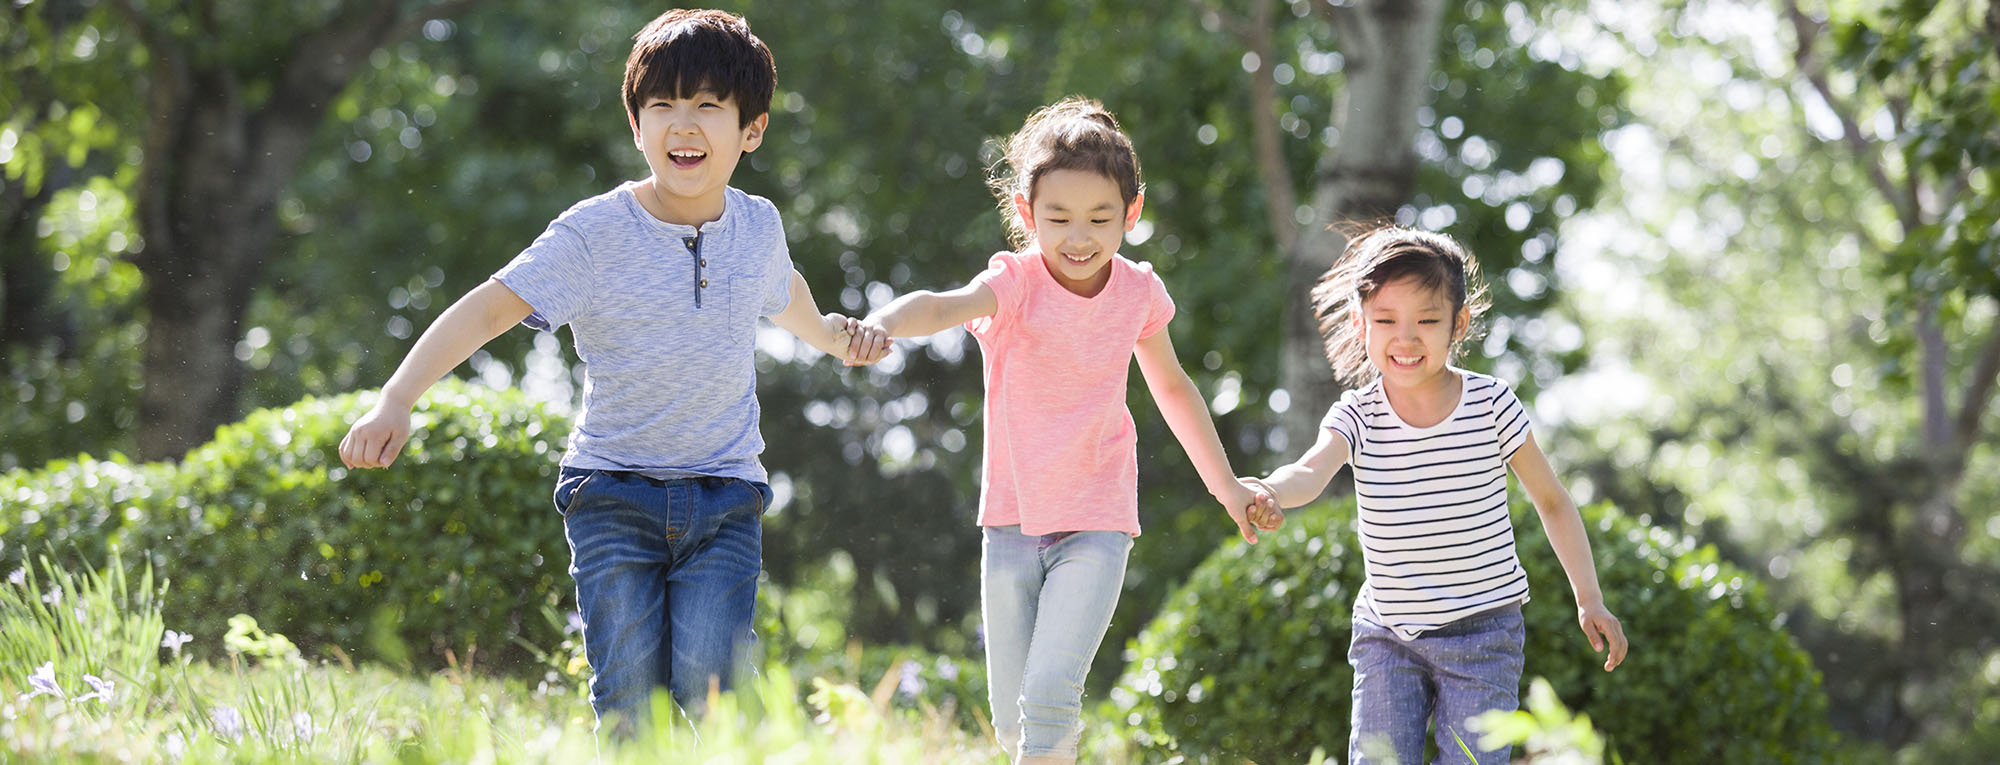 happy-children-holding-hands-running-in-woods-2022-03-24-19-55-16-utc.jpg